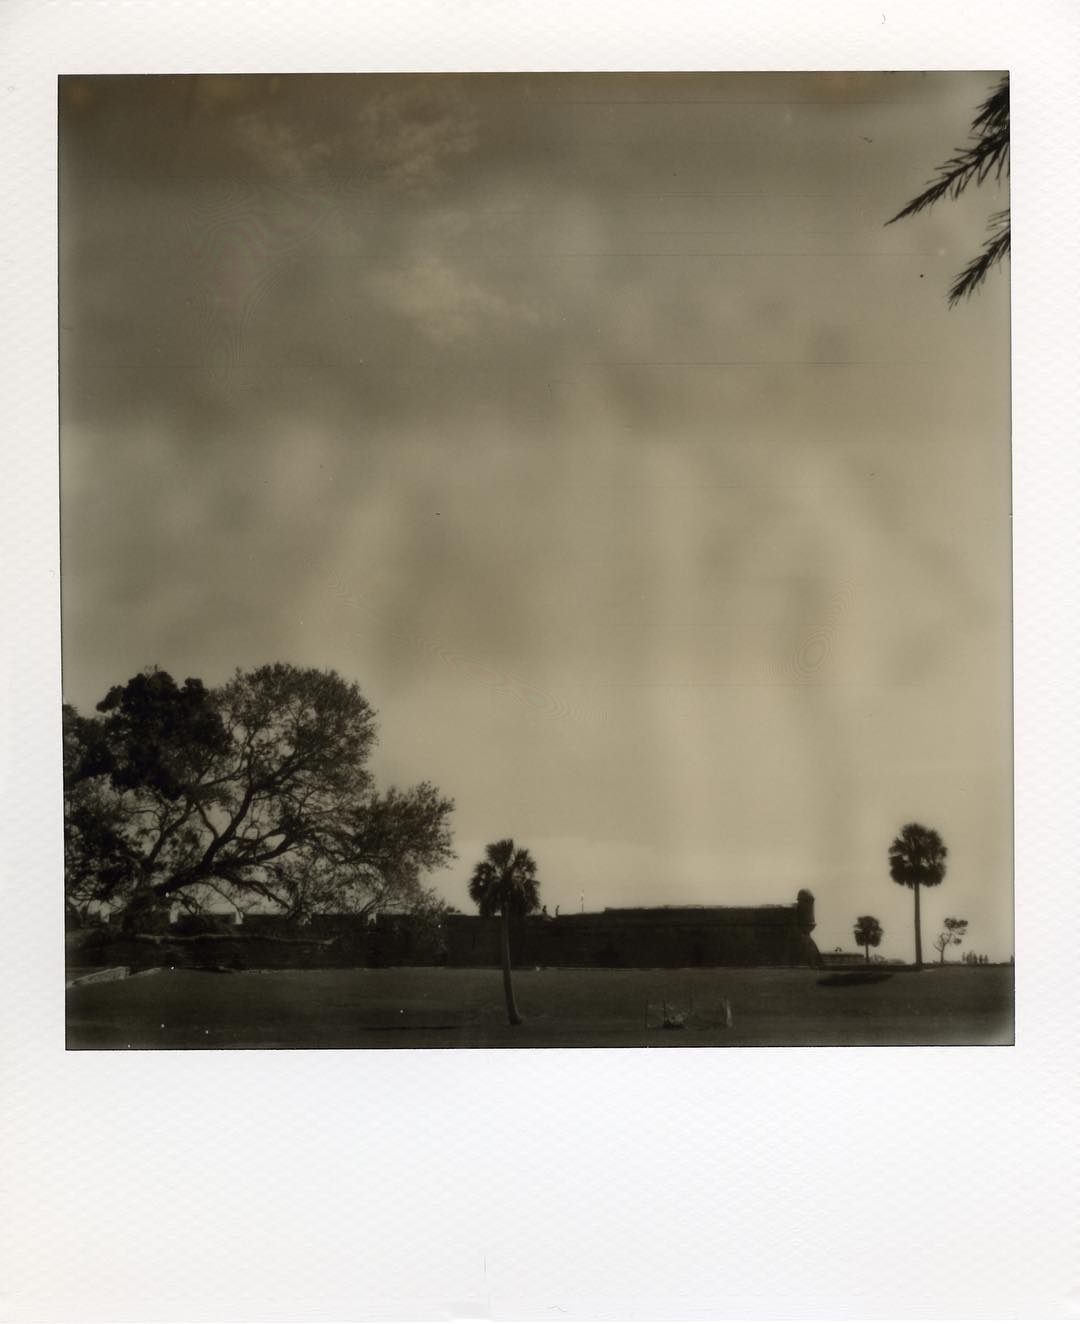 Fort Matanzas National Monument, St. Augustine, Florida. #sx70 #polaroid #polaroidoriginals #blackandwhitepolaroid